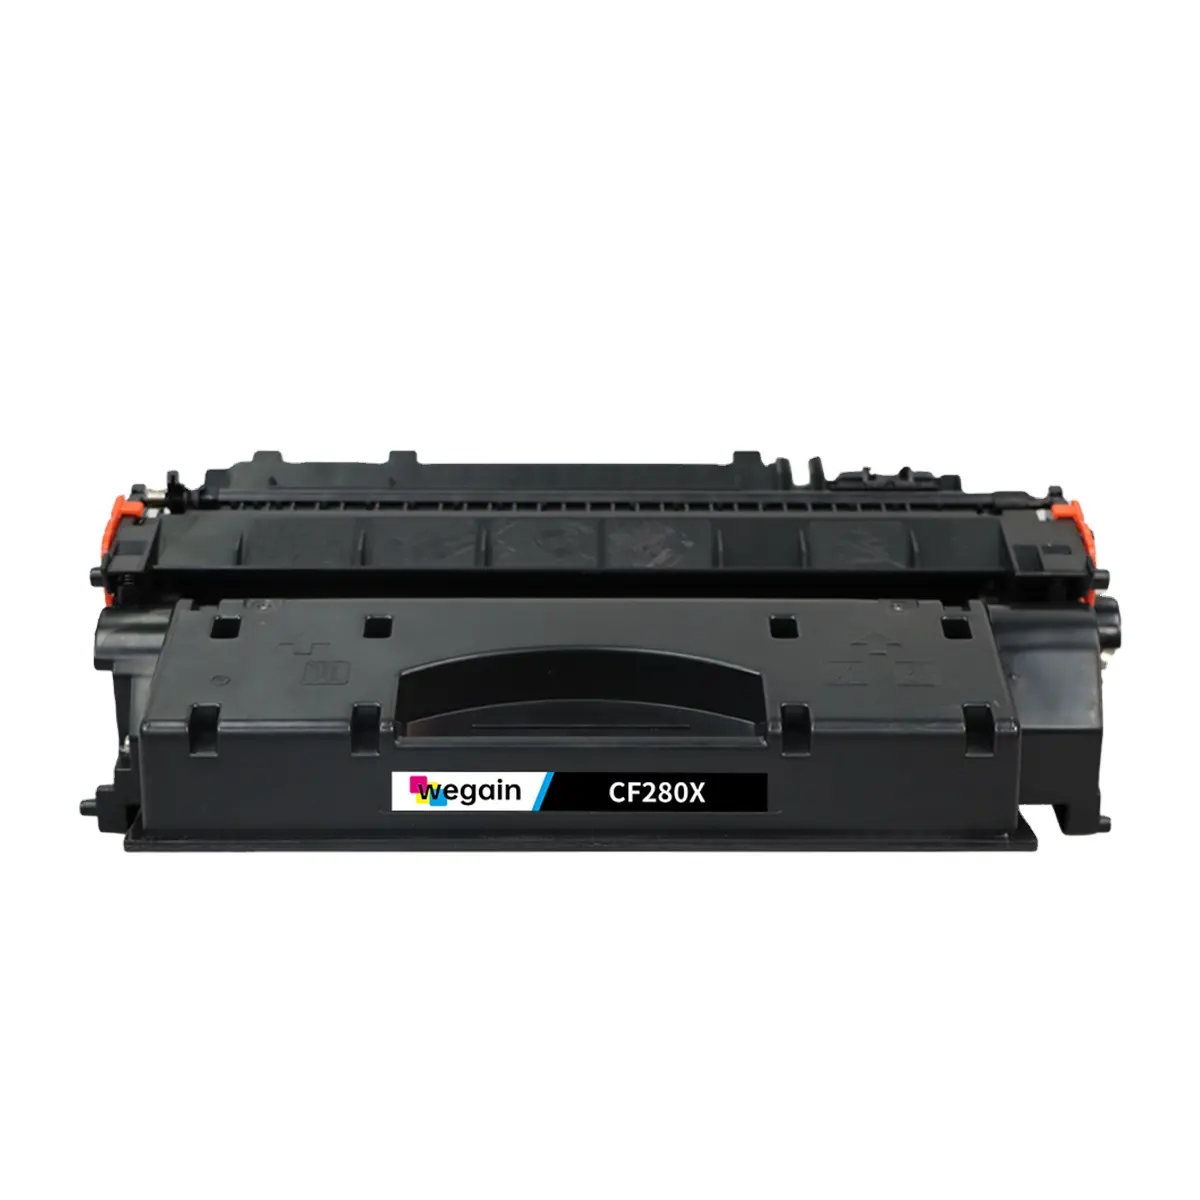 Toner Cartridge 80 CF280 Premium Compatible Toner Cartridge for HP Laserjet PRO 400 M401A M425DN Printer